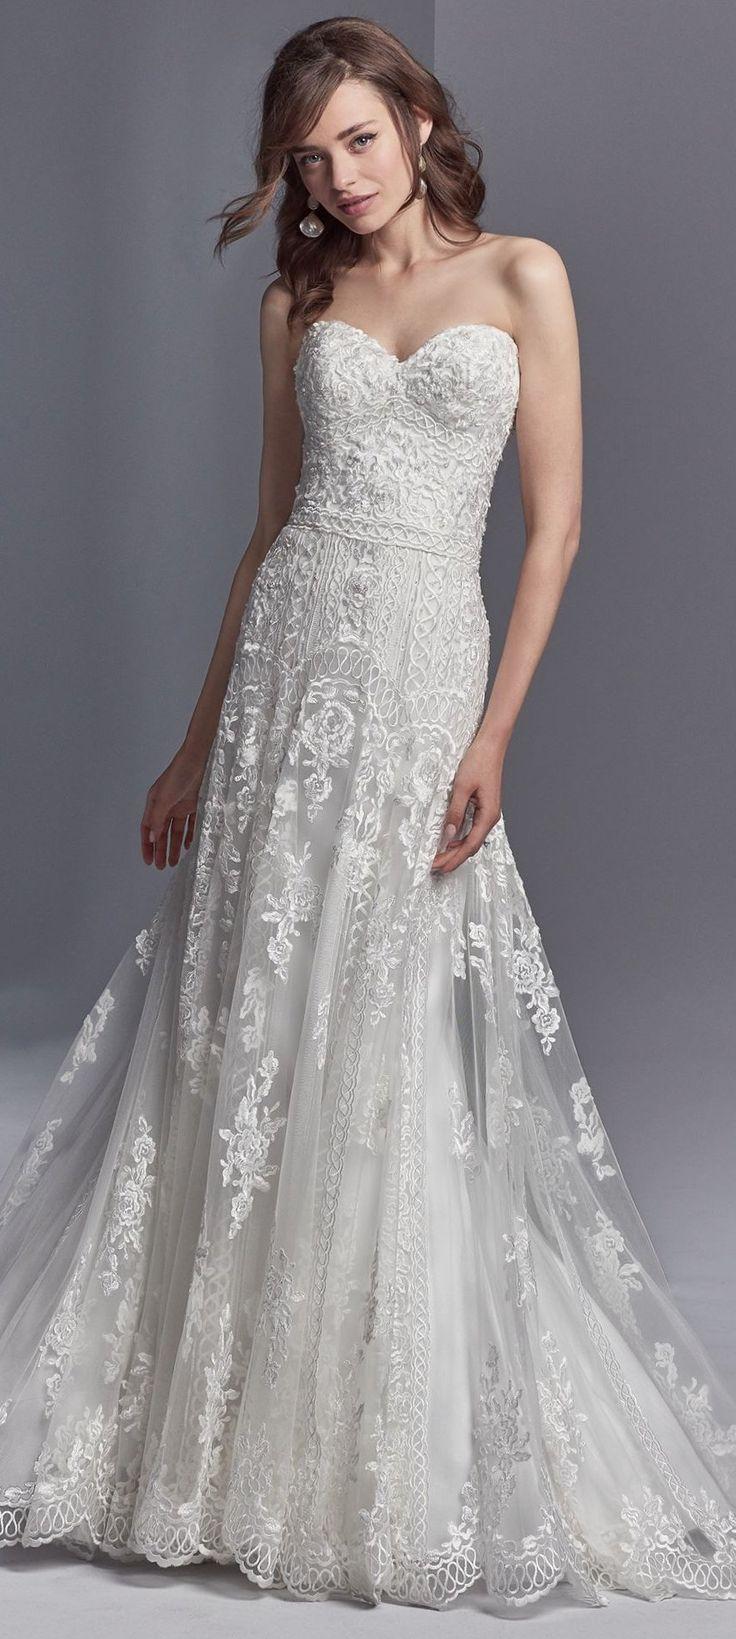 Dress - Maggie Sottero Wedding Dresses #2791785 - Weddbook